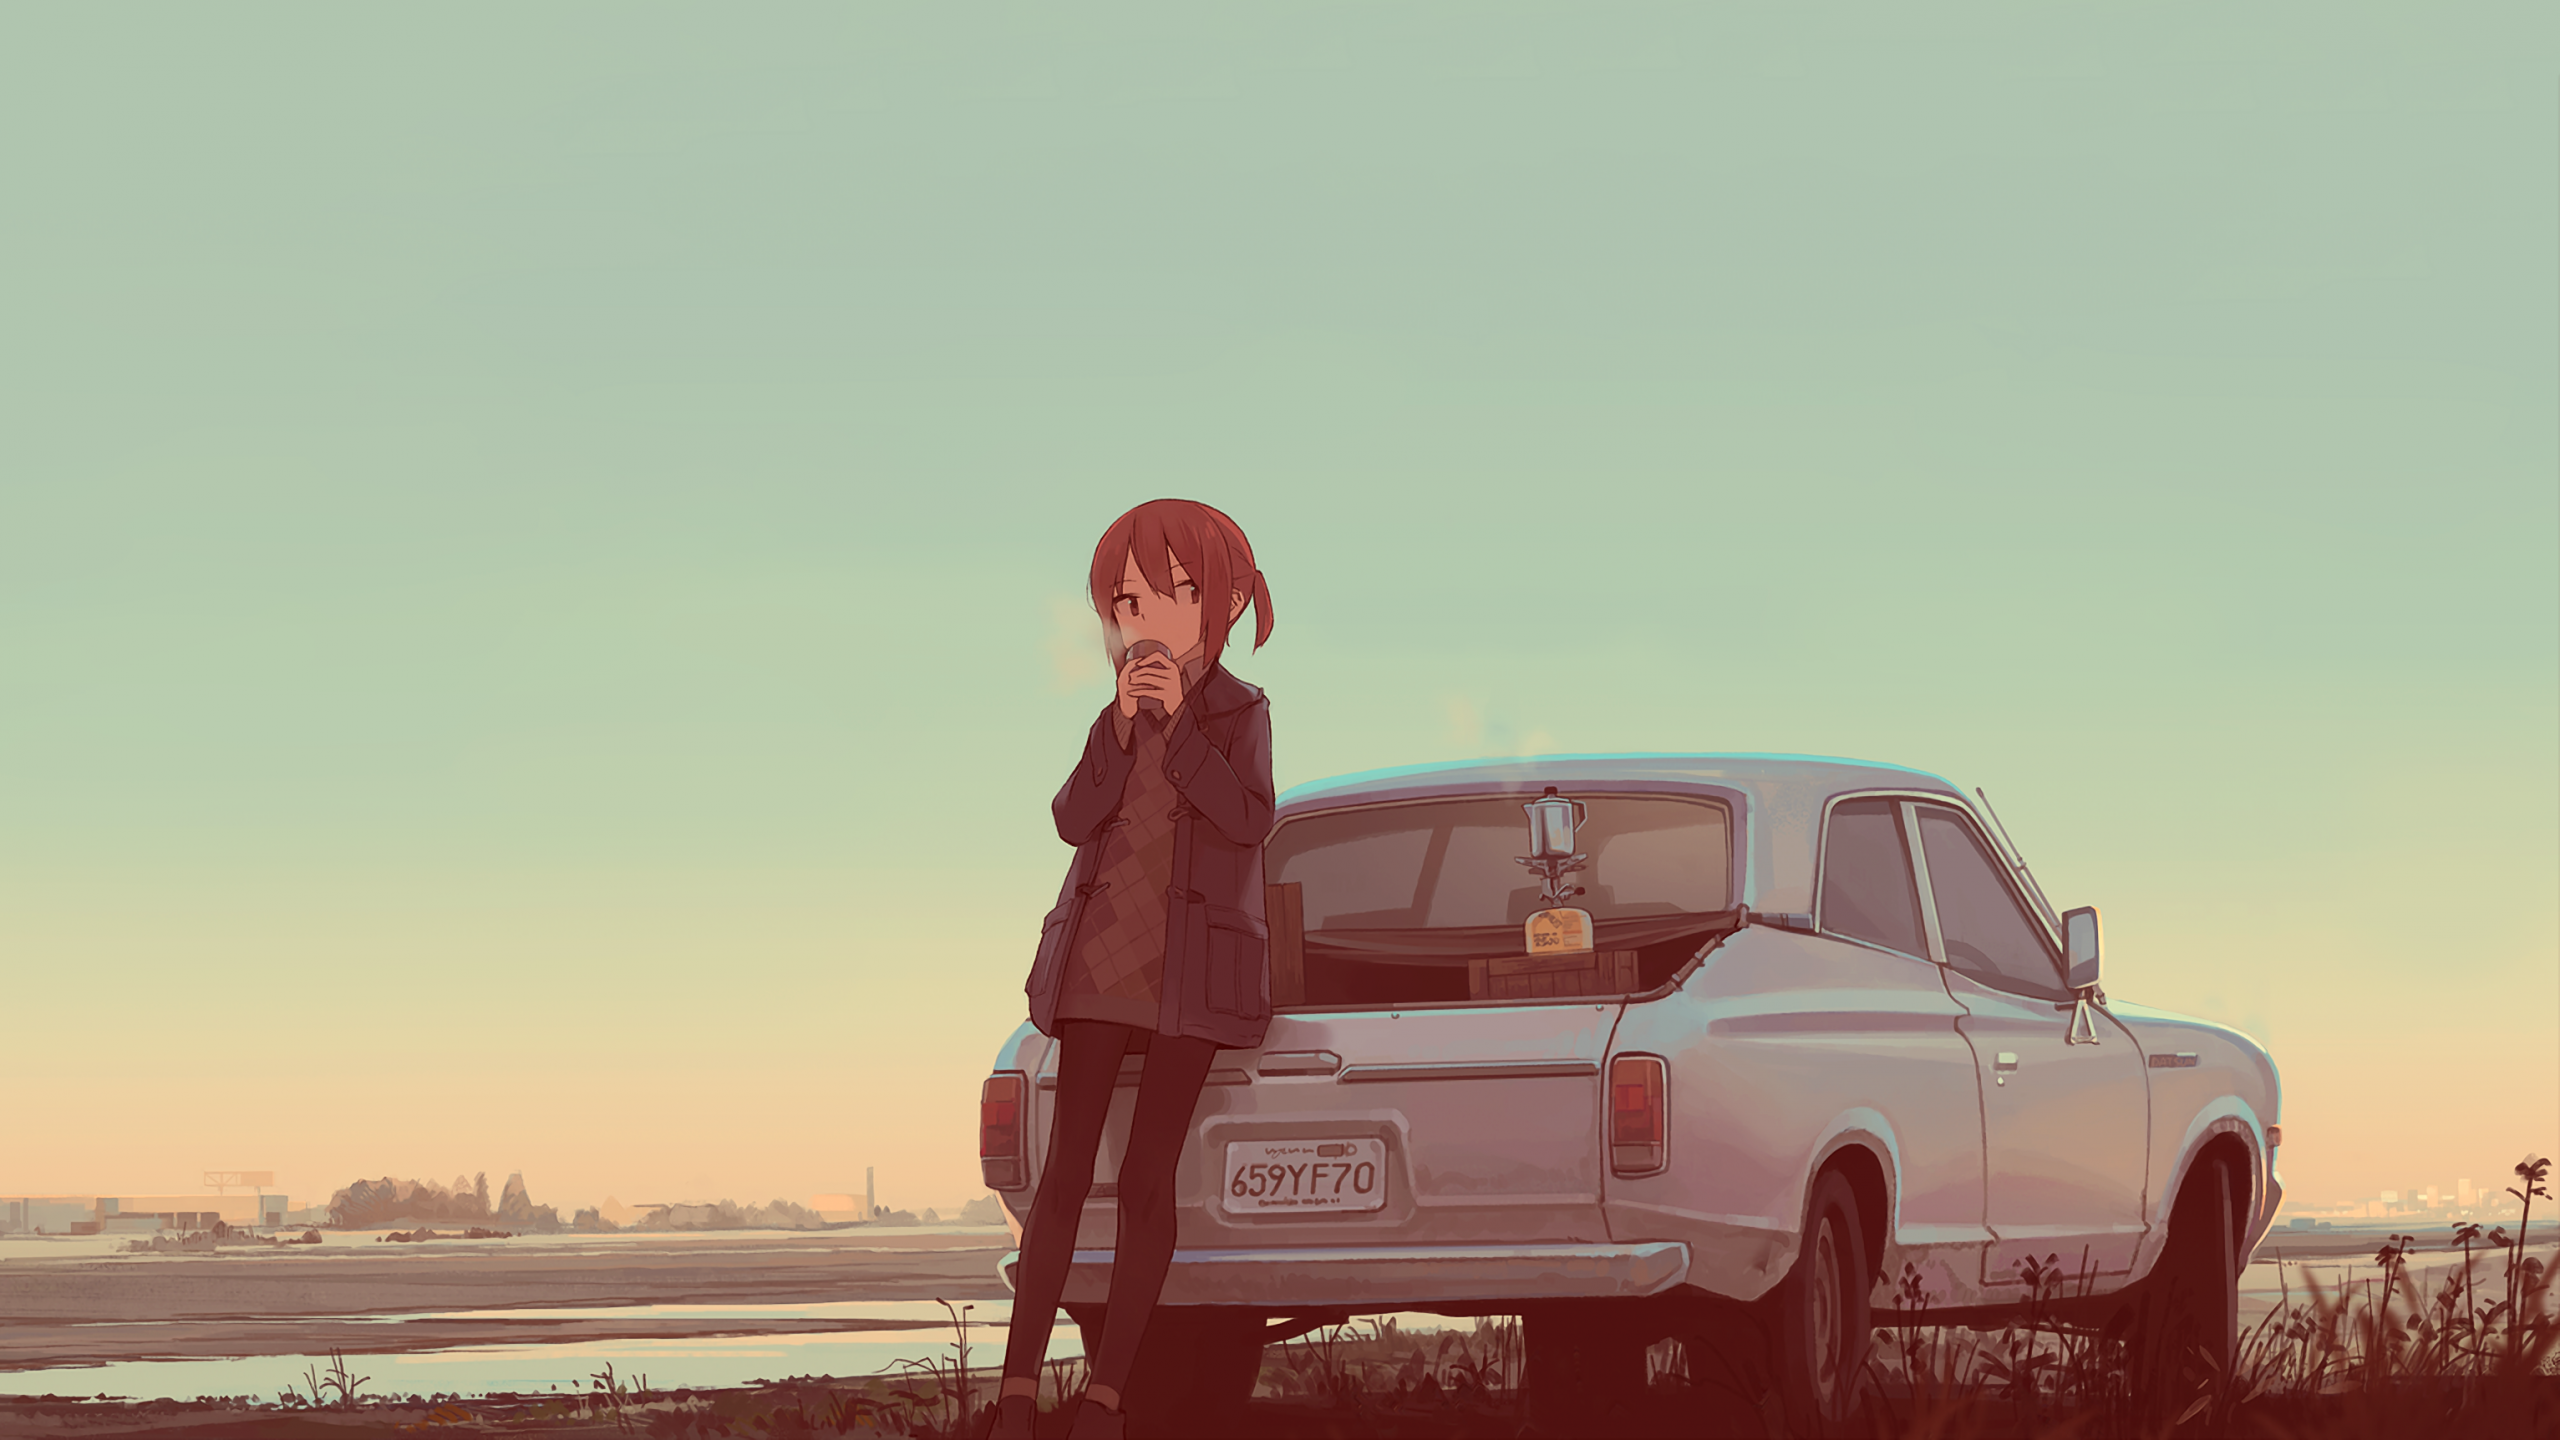 Desktop Wallpaper Cute Anime Girl Drinking Tea Car Hd Image Picture Background Yei6x8